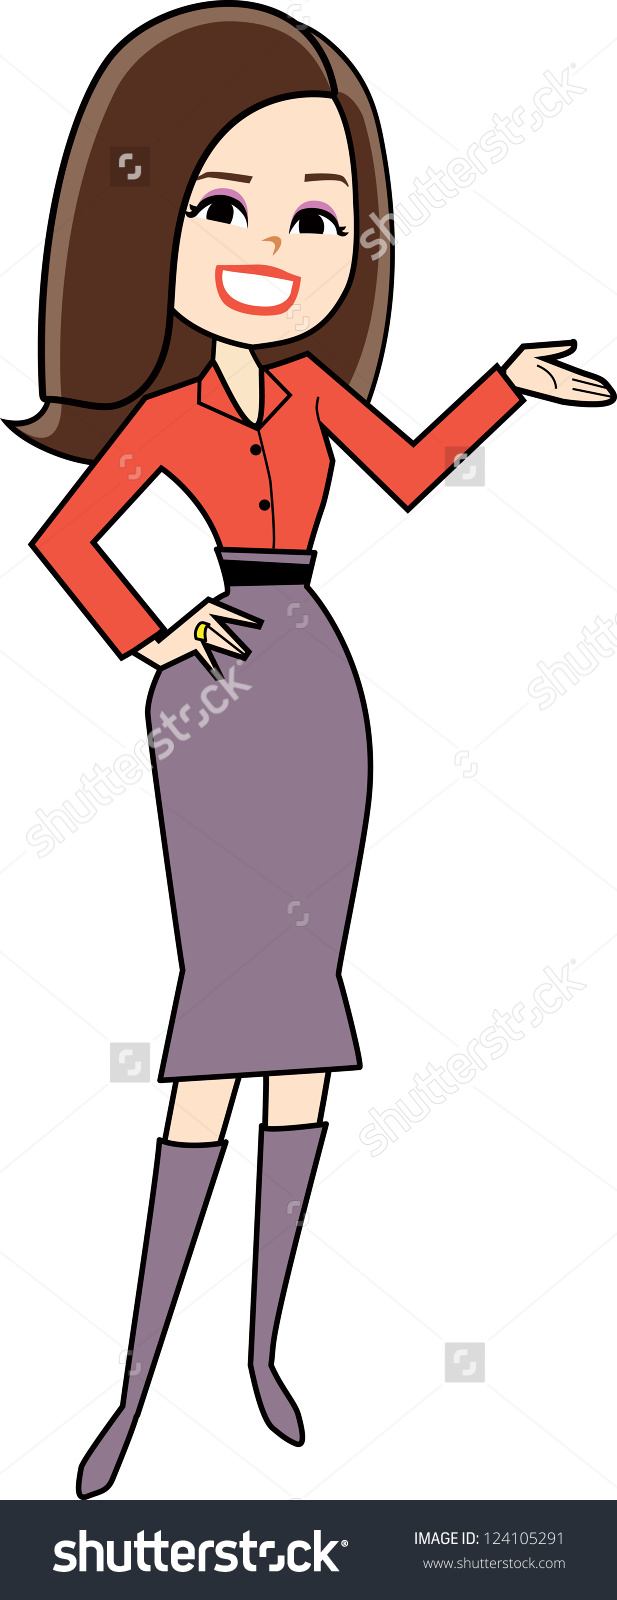 Cartoon Woman Clipart Retro Style Drawing Stock Vector 124105291 .